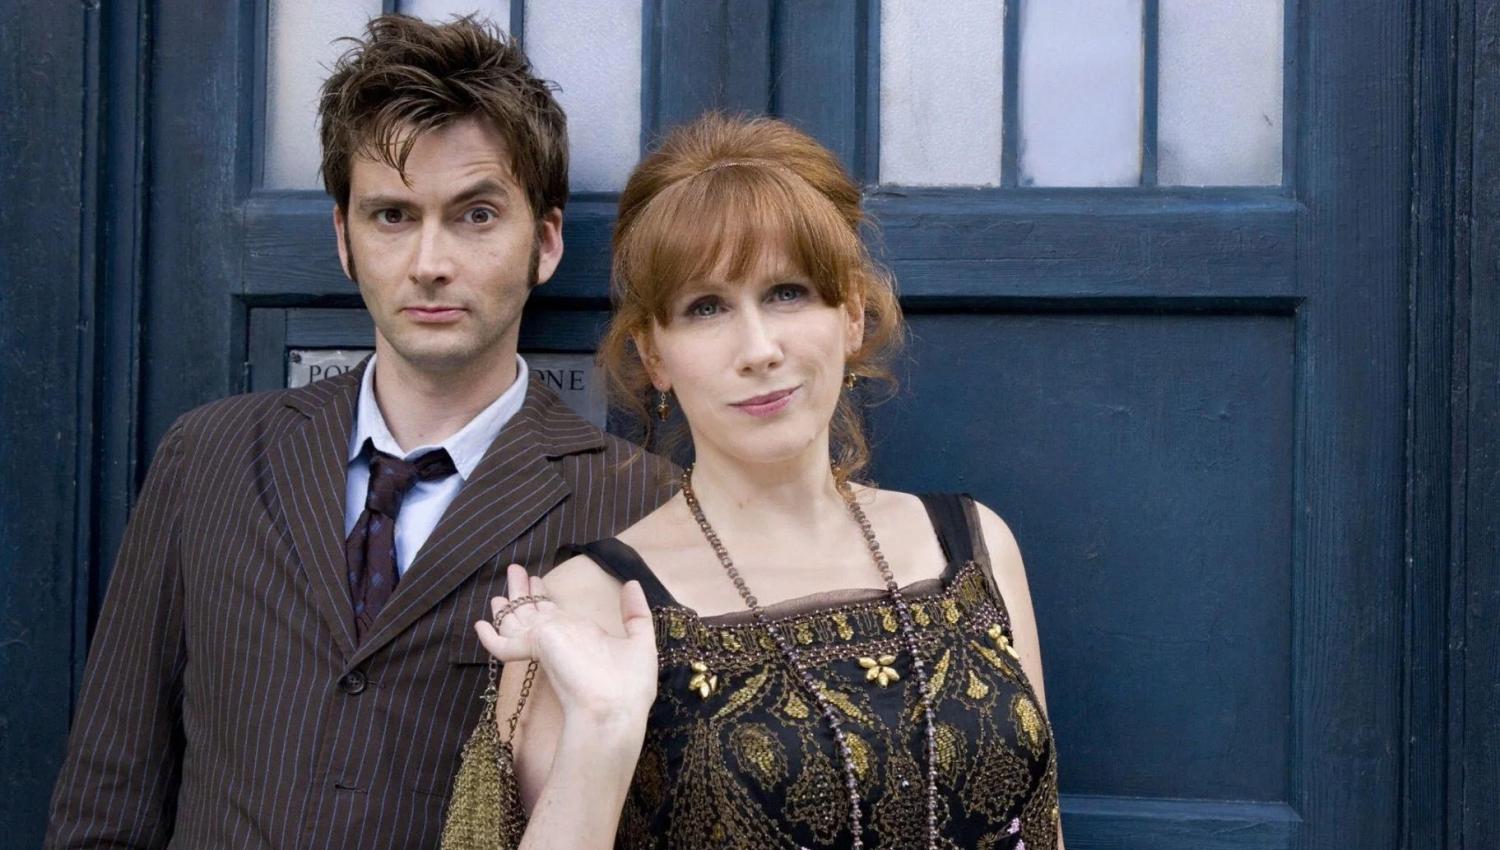 https://www.adoxa.info/wp-content/uploads/2022/03/1647432291_Doctor-Who-Donna-Noble-fera-t-elle-partie-du-Special-2023.jpg